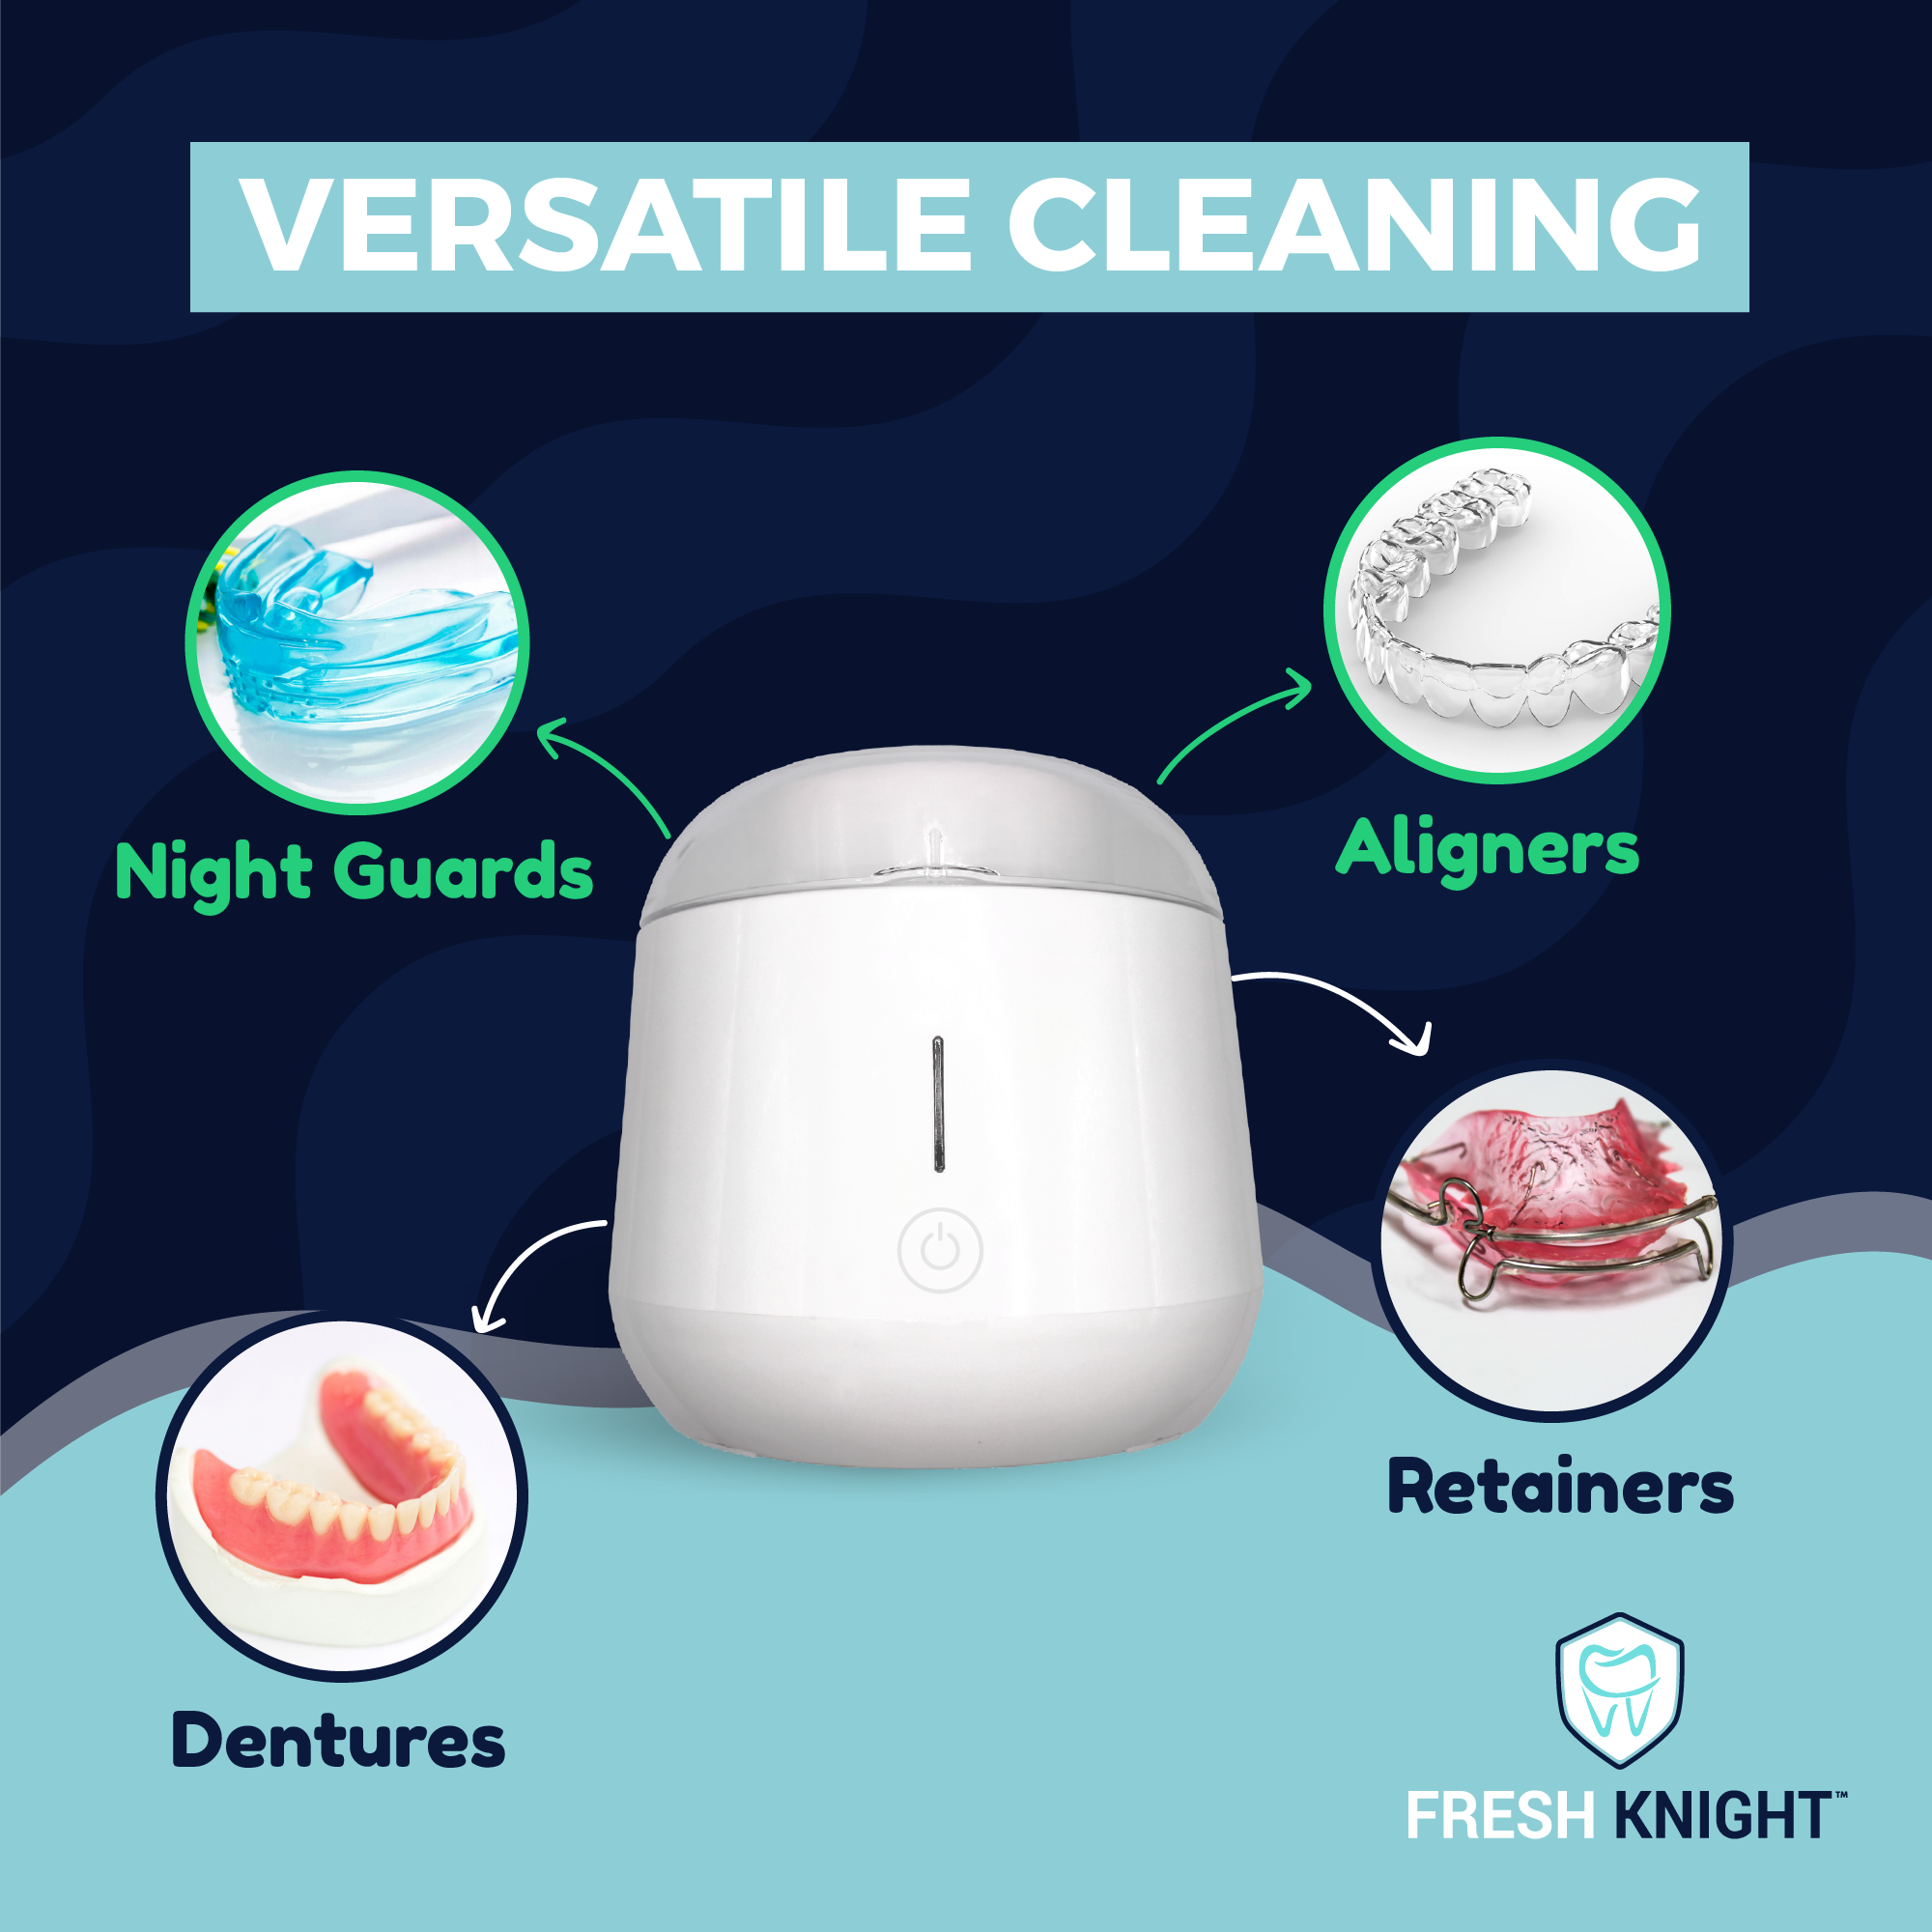 Sonic Fresh Ultrasonic Cleaner – FreshKnight